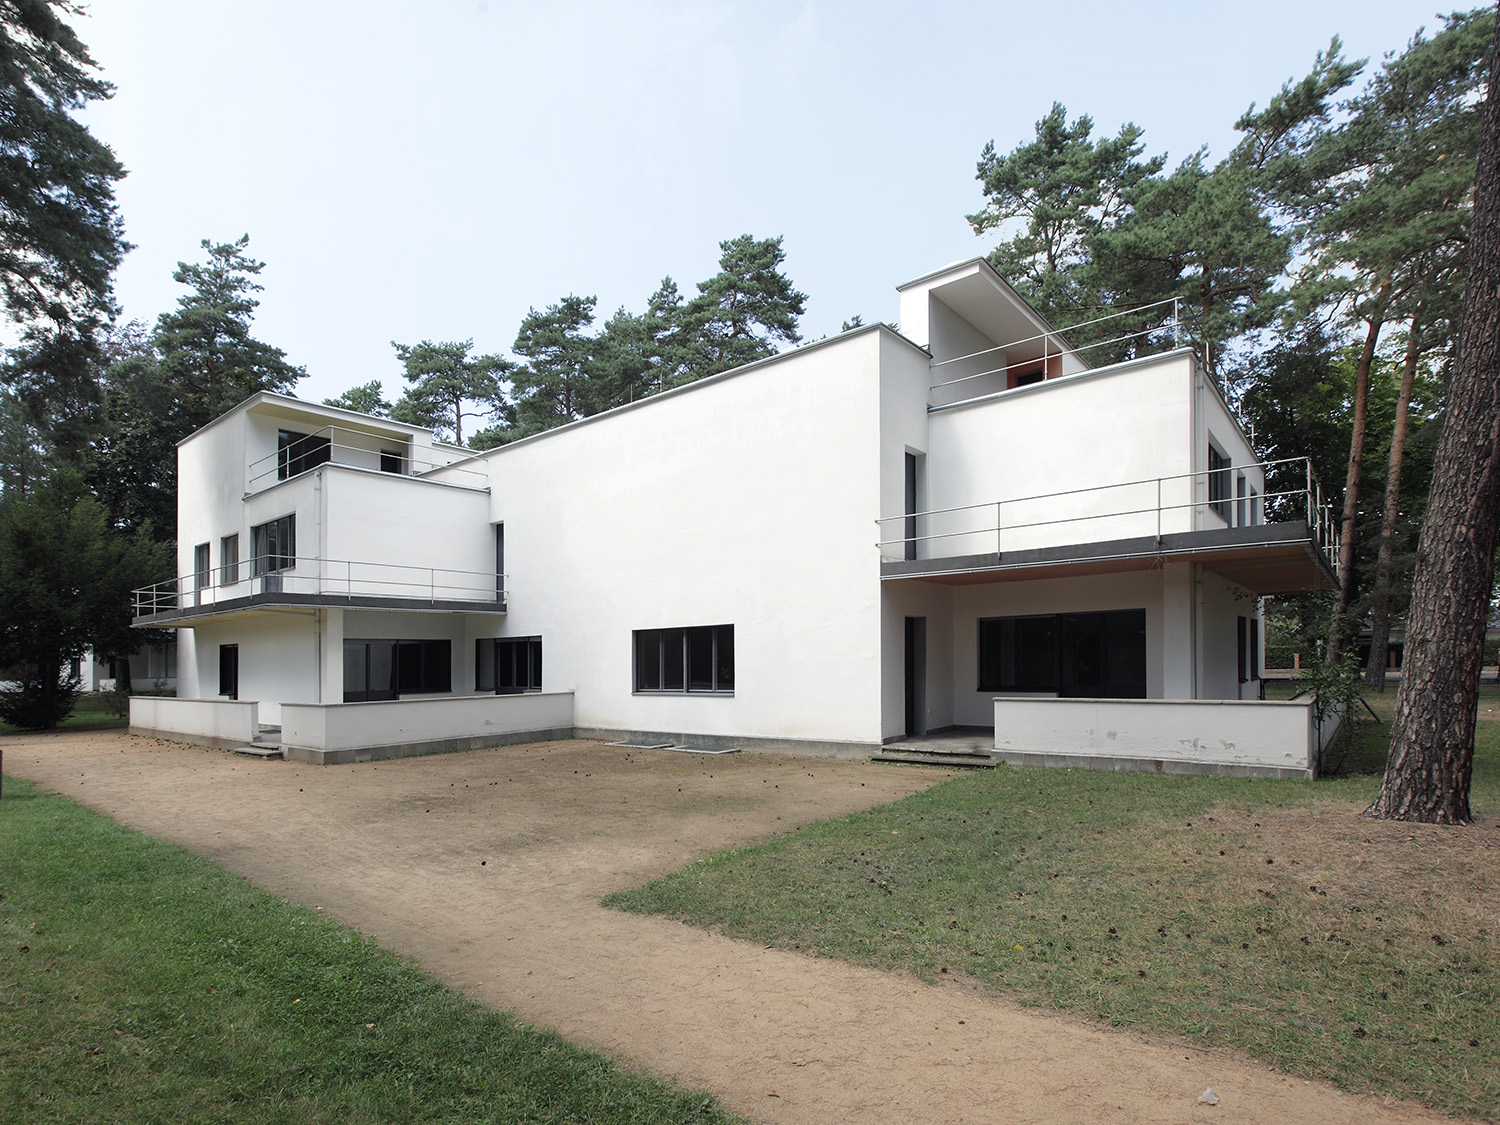 Bauhaus Master's Houses
Walter gropius, 1925
Dessau